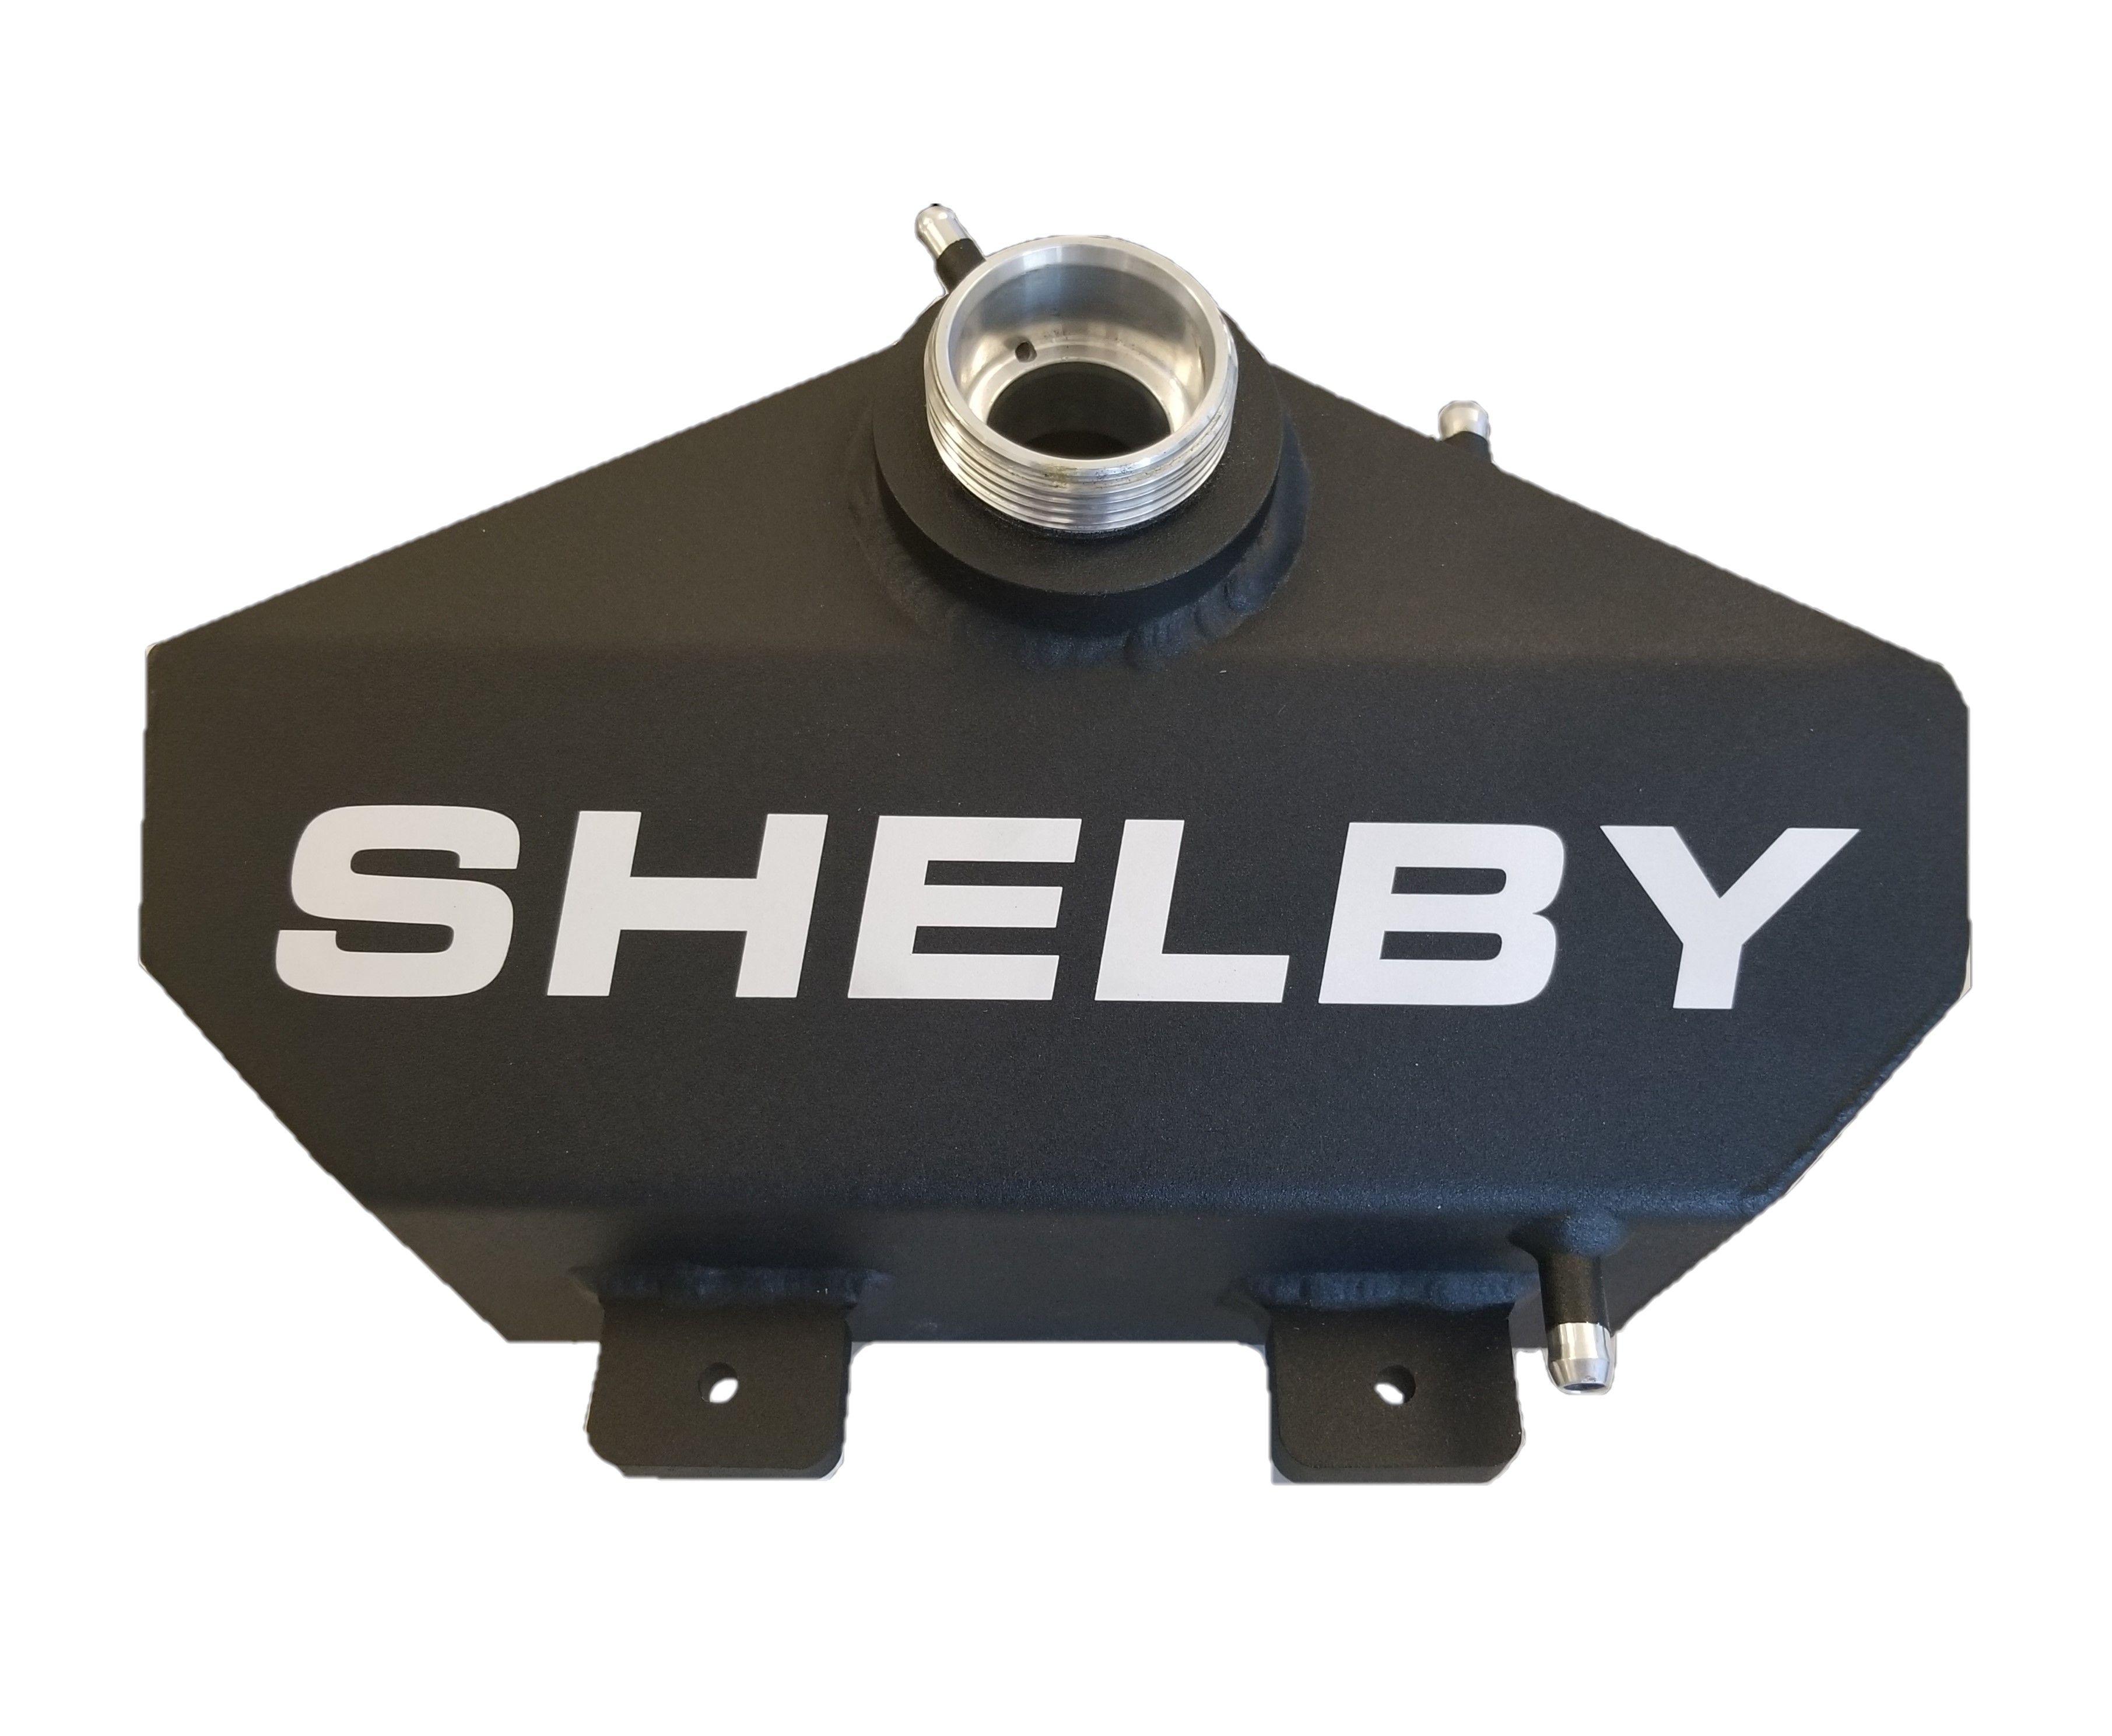 2015-2020 Shelby Coolant Reservoir Tank - Black